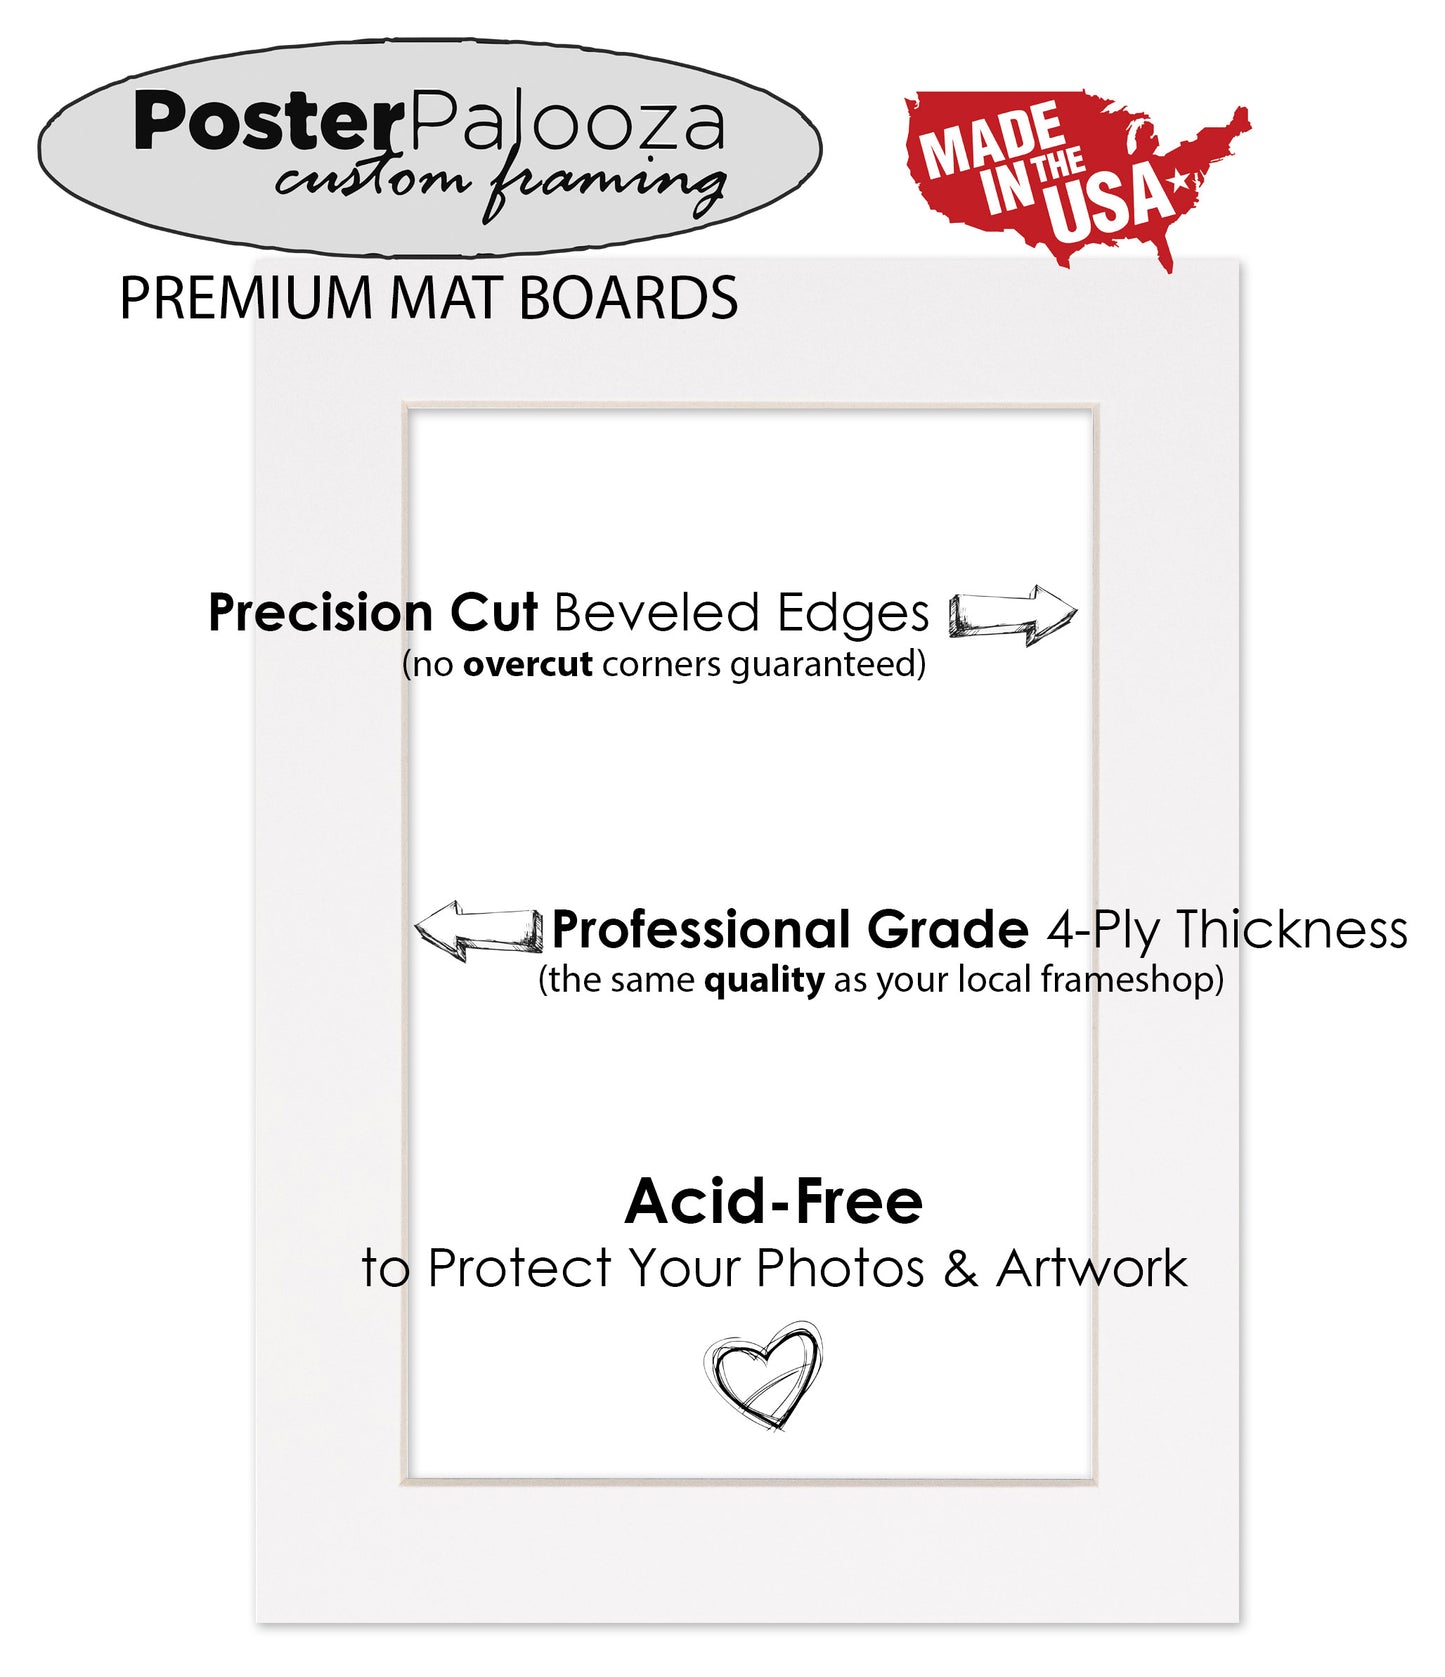 Pack of 25 Deep Red Precut Acid-Free Matboards